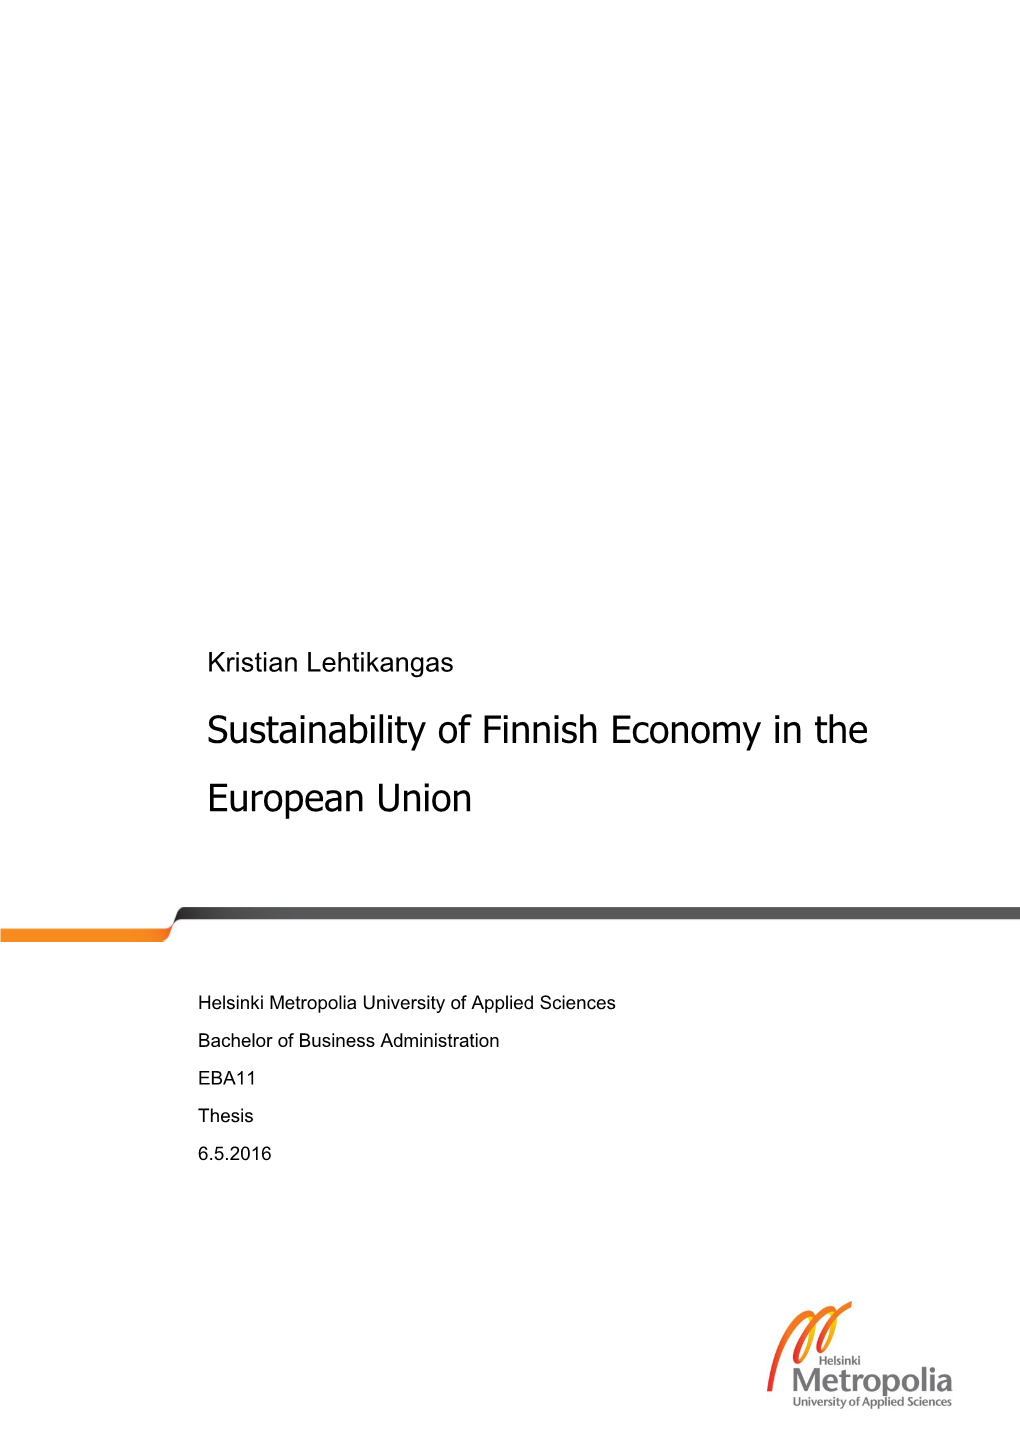 Sustainability of Finnish Economy in the European Union